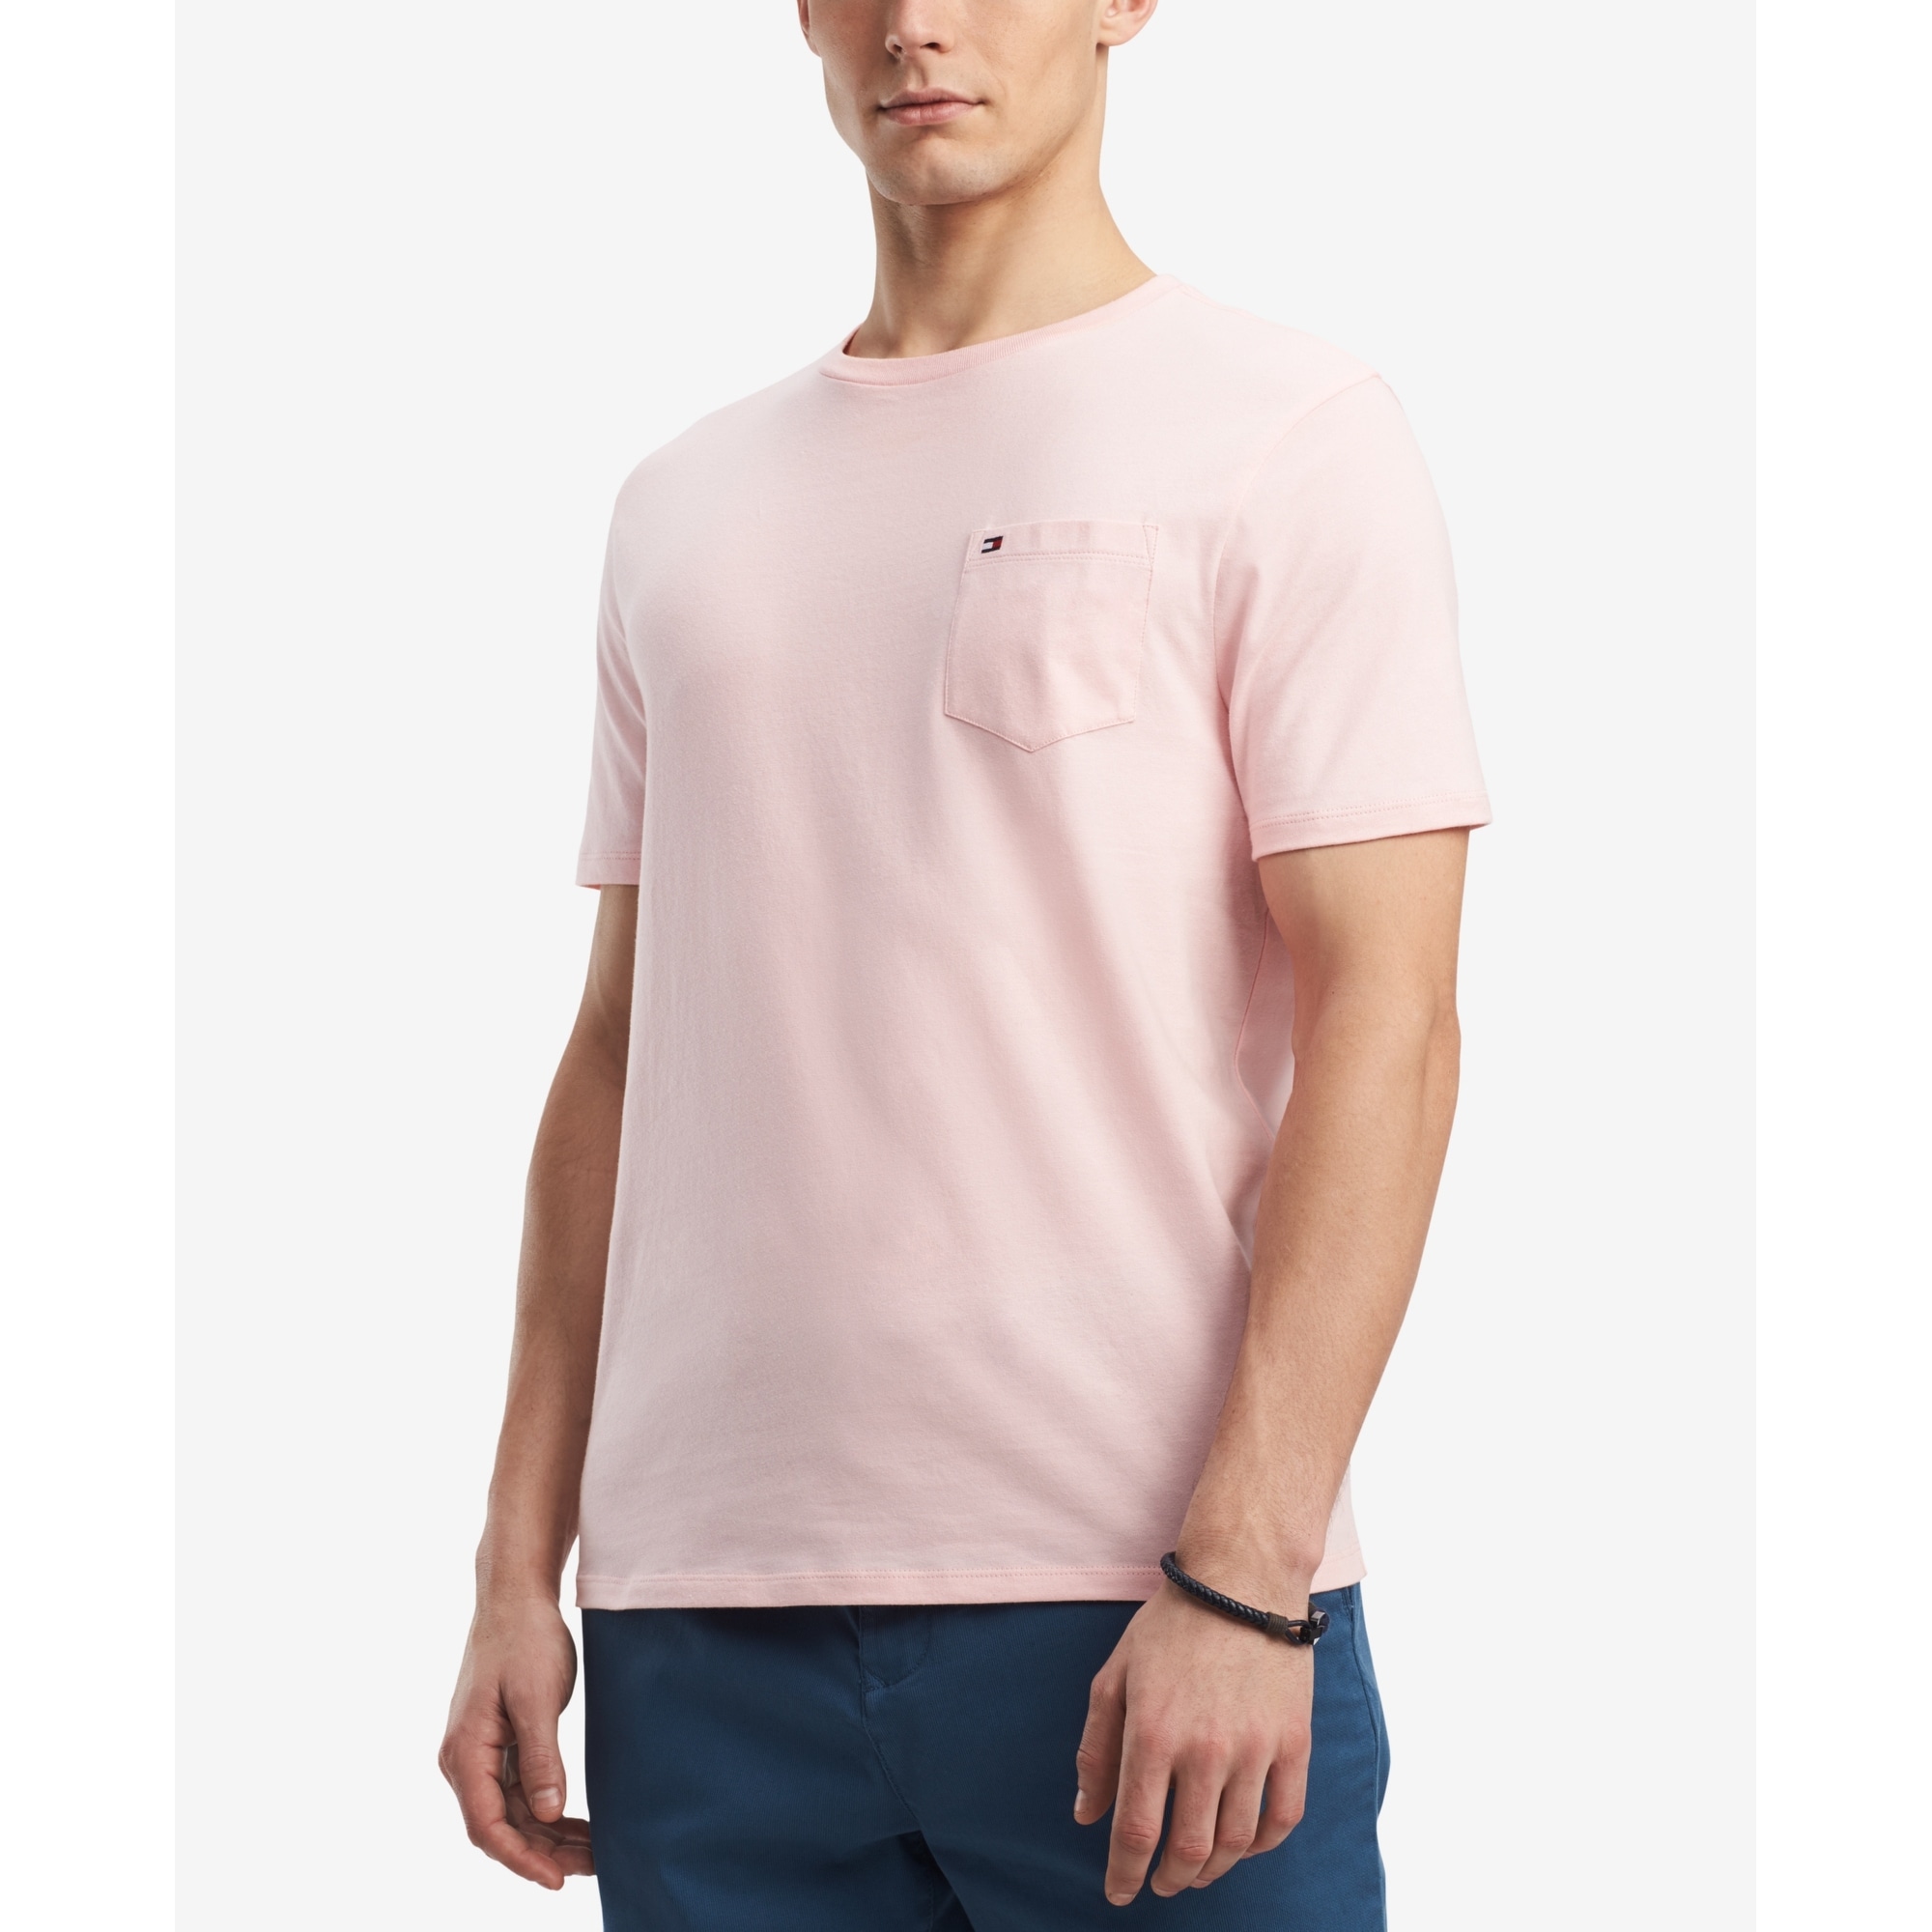 tommy hilfiger pink t shirt mens